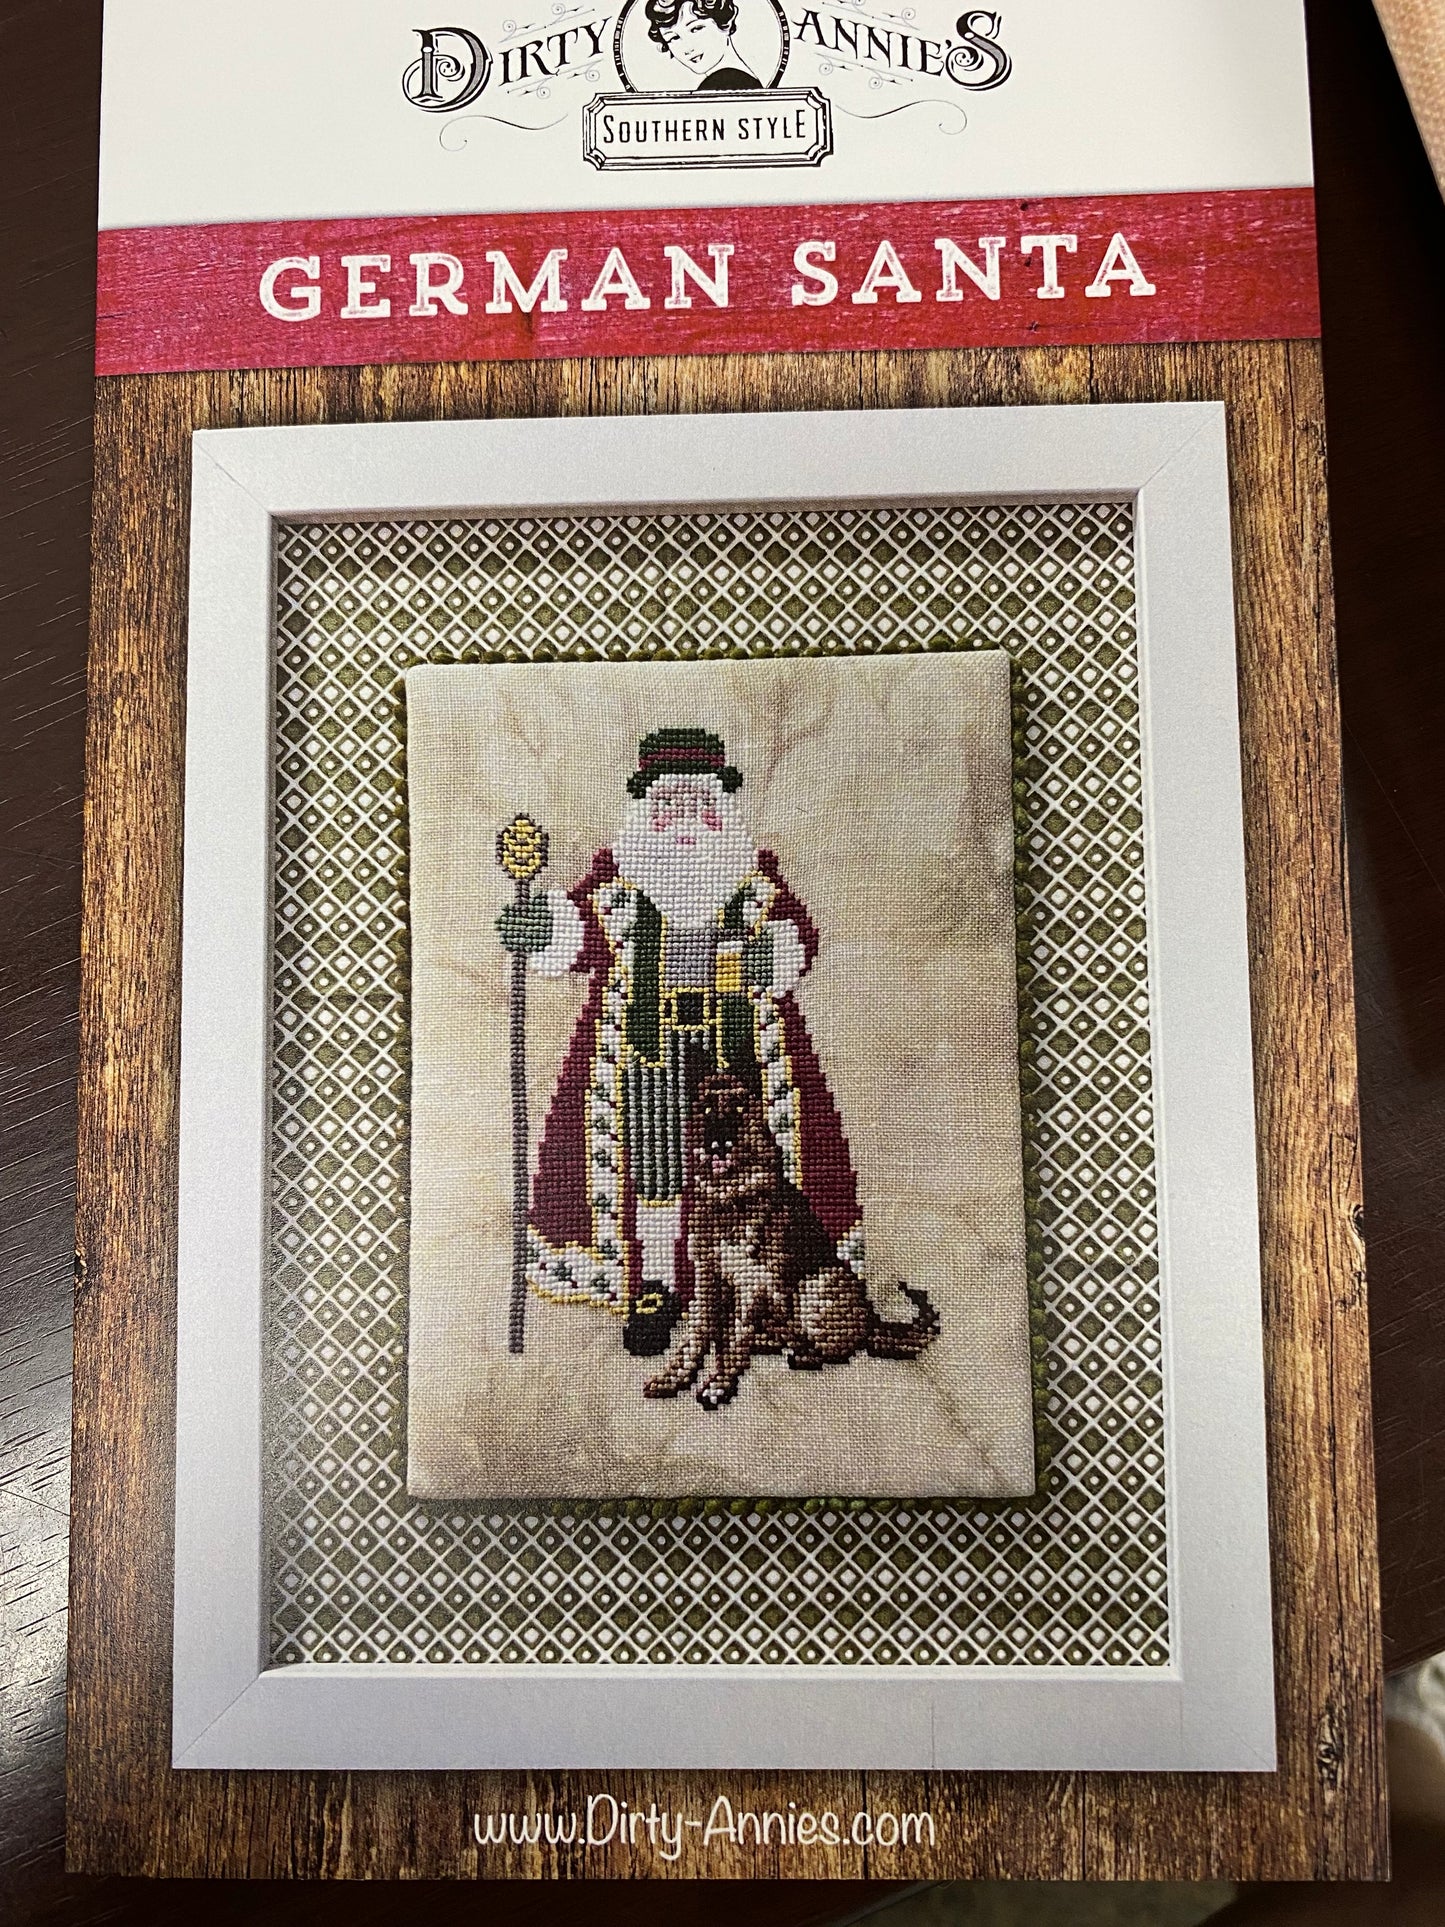 German Santa by Dirty Annie's